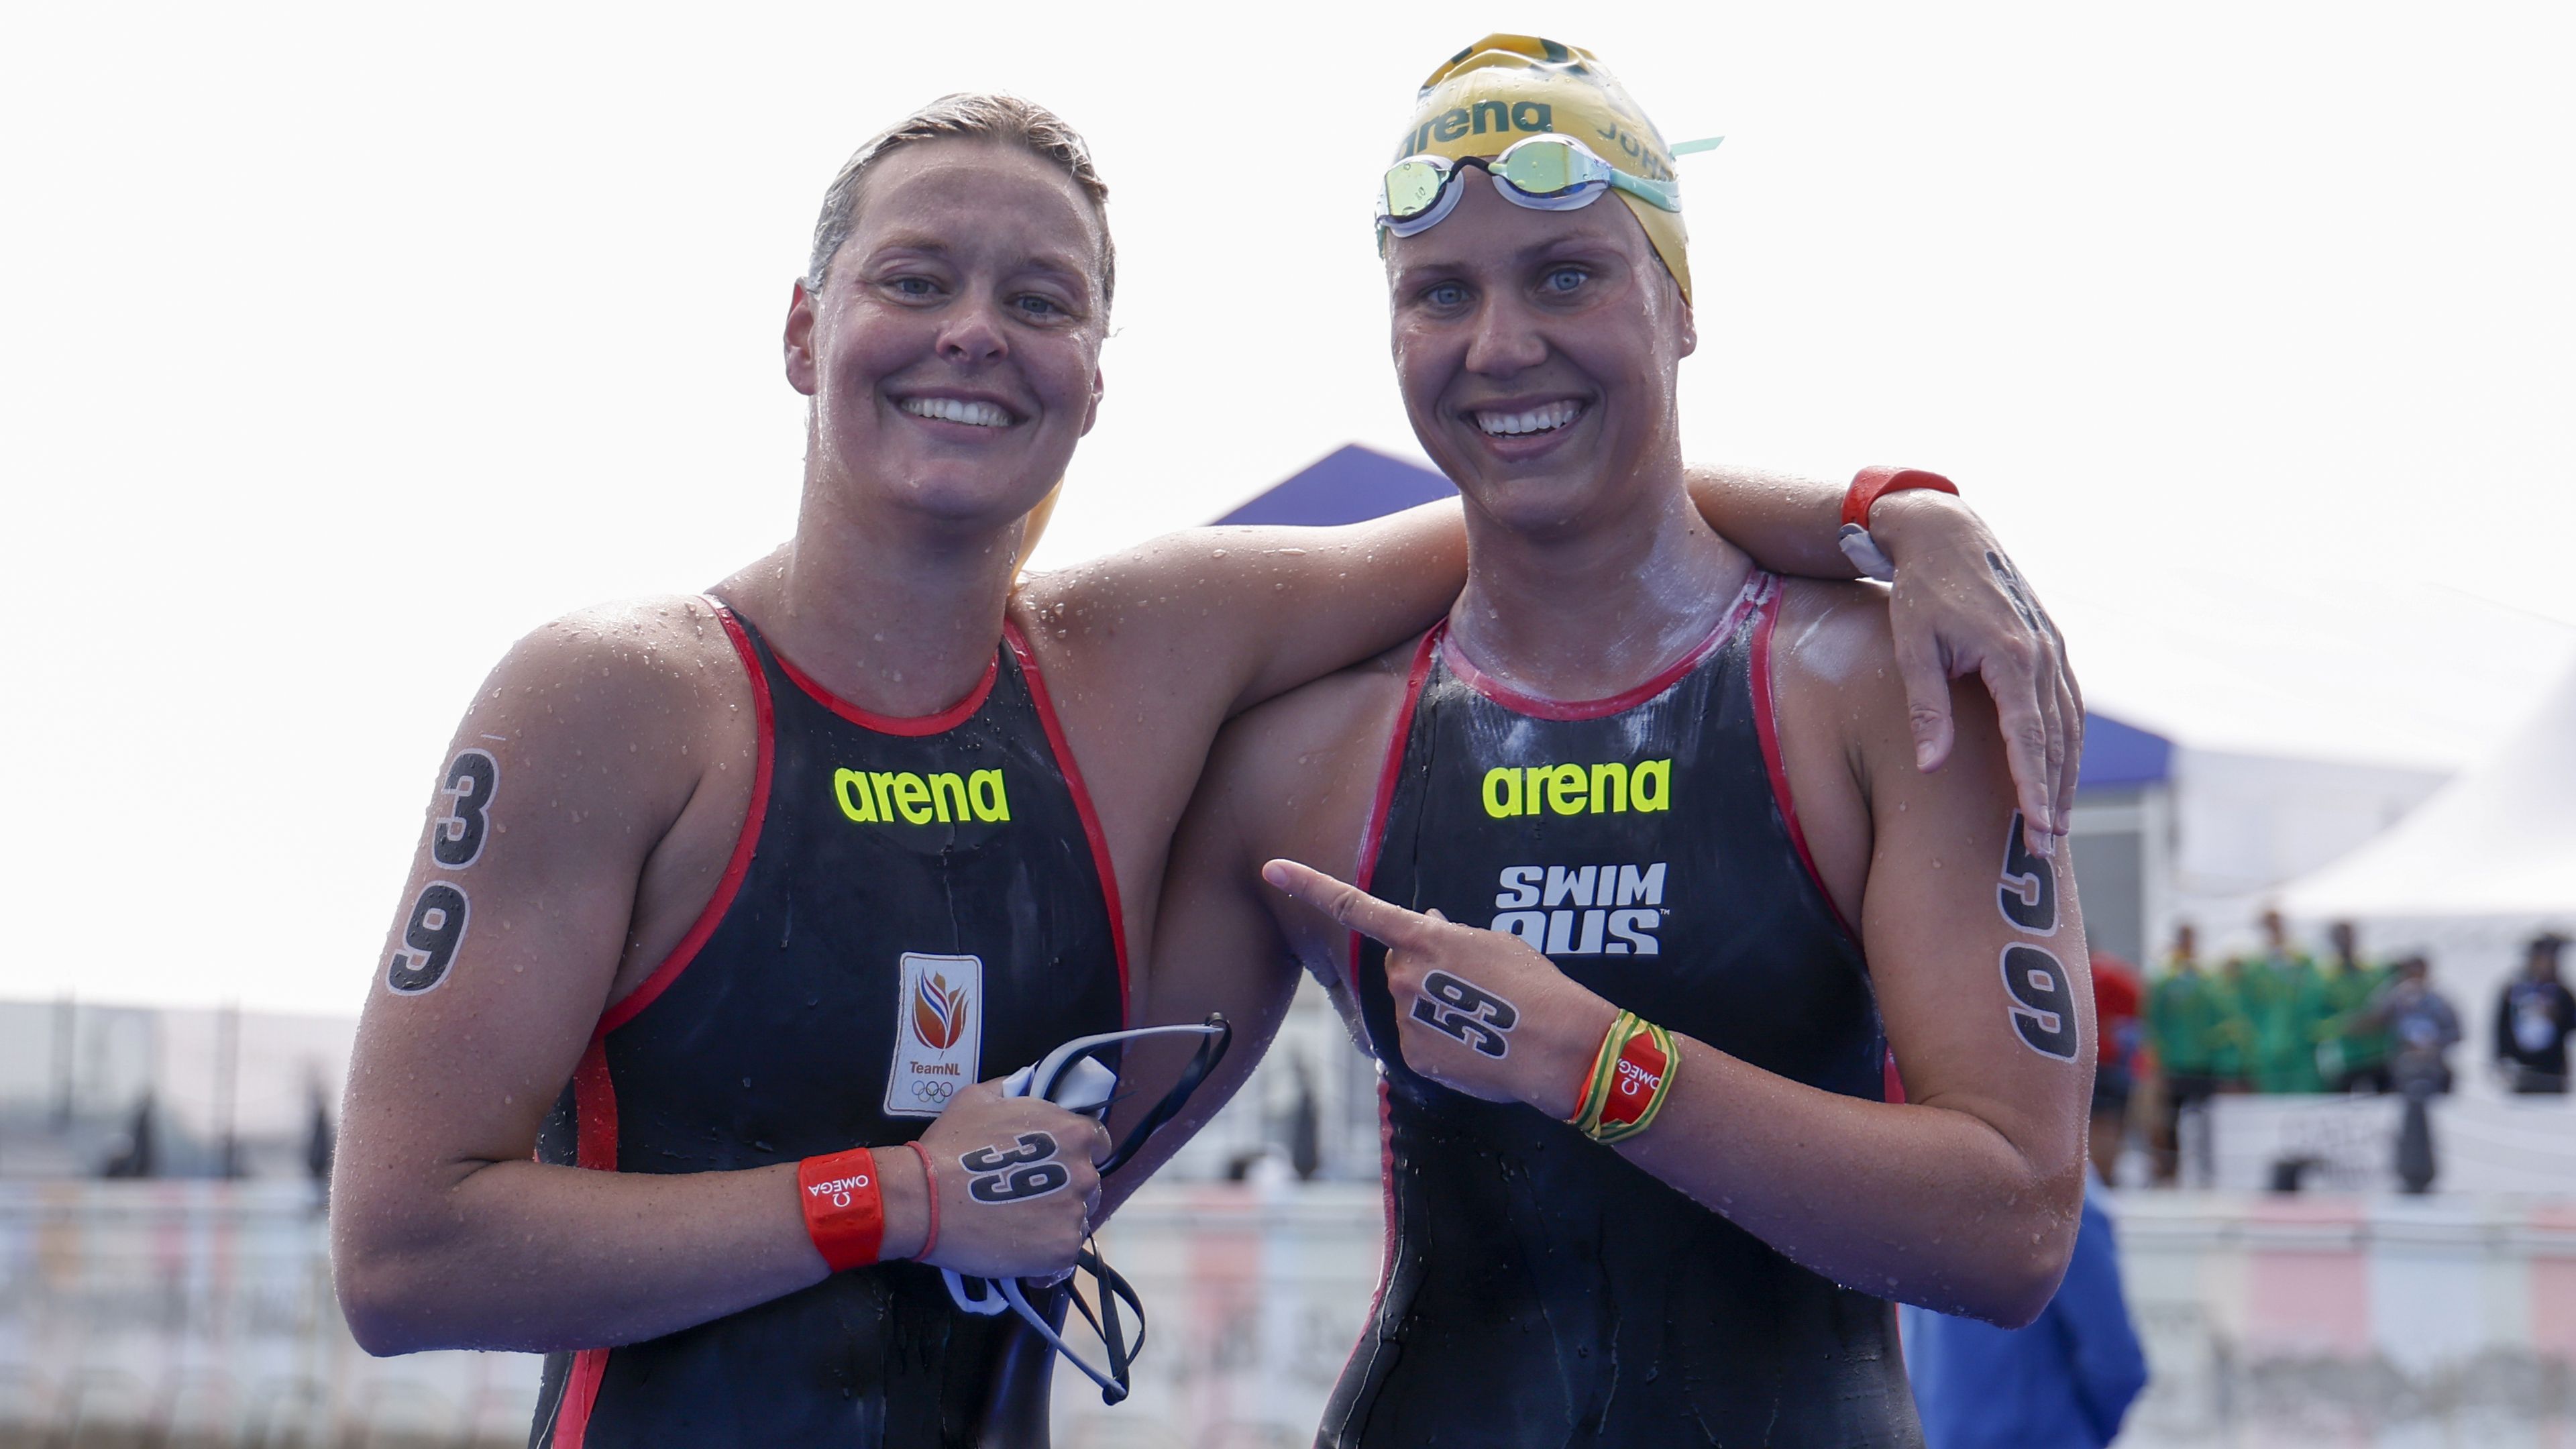 Sharon van Rouwendaal of the Netherlands and Moesha Johnson of Australia celebrate after the 10km World Aquatics Championships event.